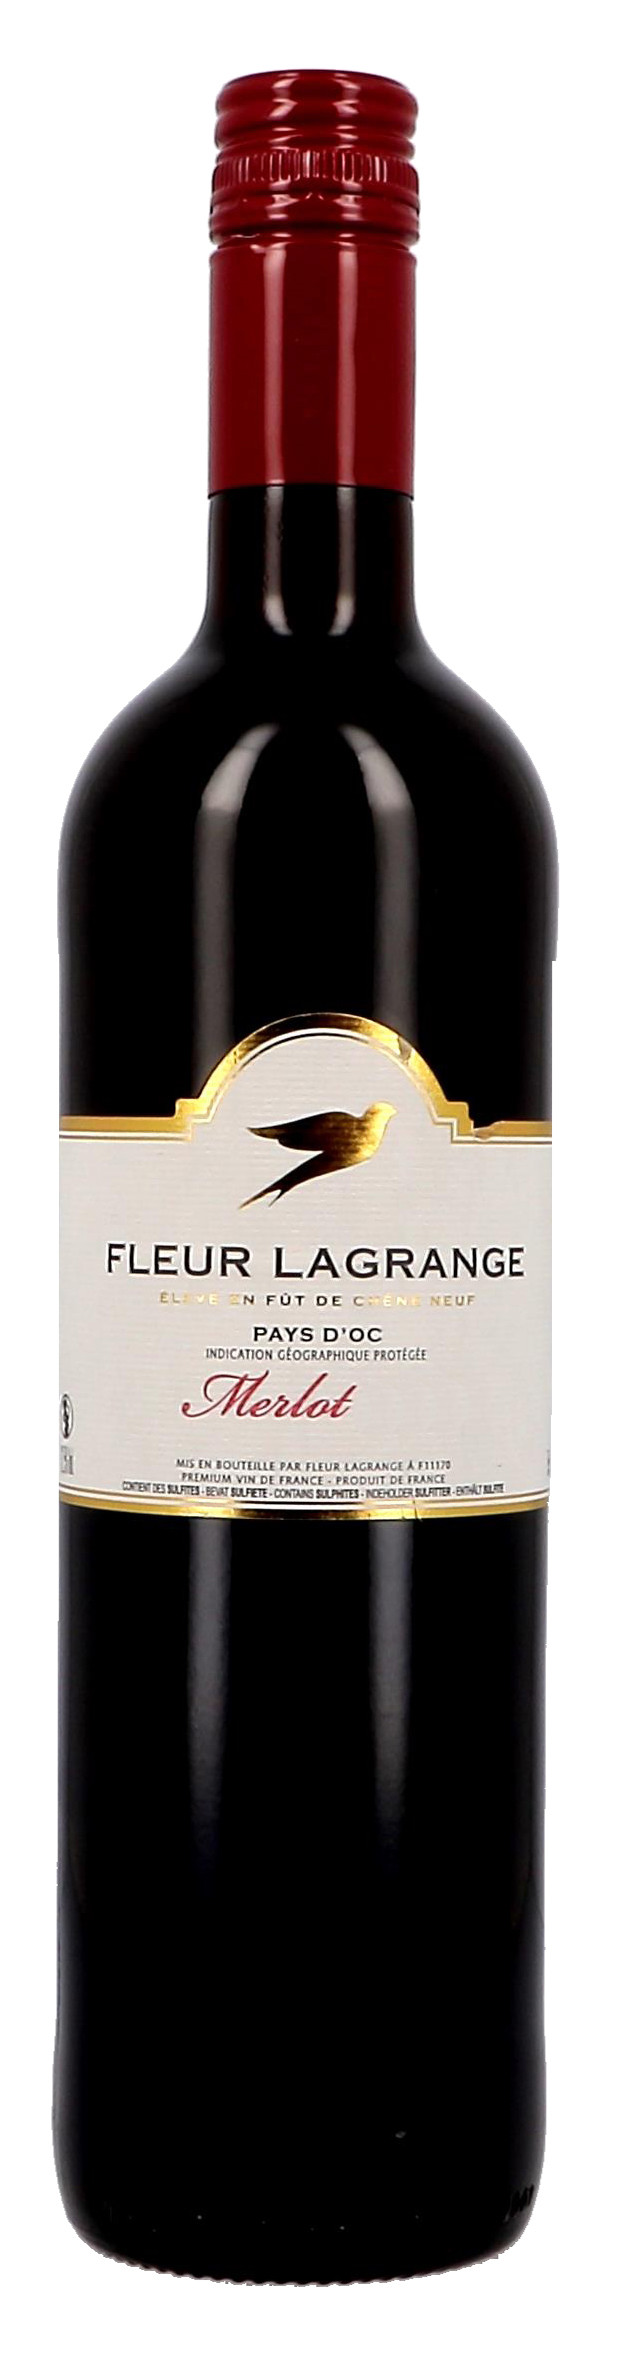 Fleur Lagrange Merlot 75cl Pays d'Oc - IGP (Wijnen)